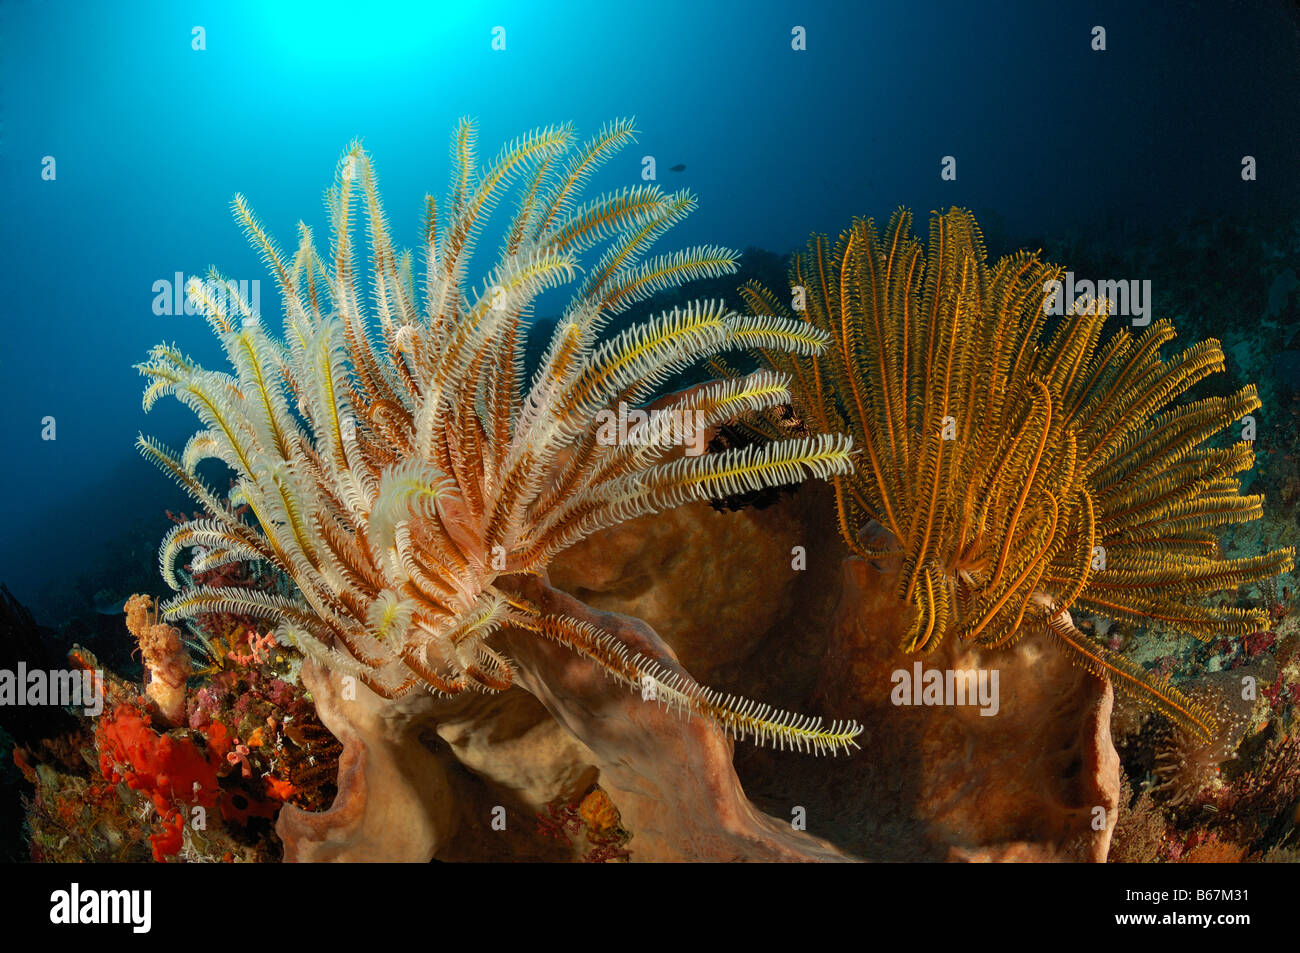 Seelilien am Riff Commanthina spec Alor kleinen Sunda-Inseln Indo Pacific Indonesien Stockfoto